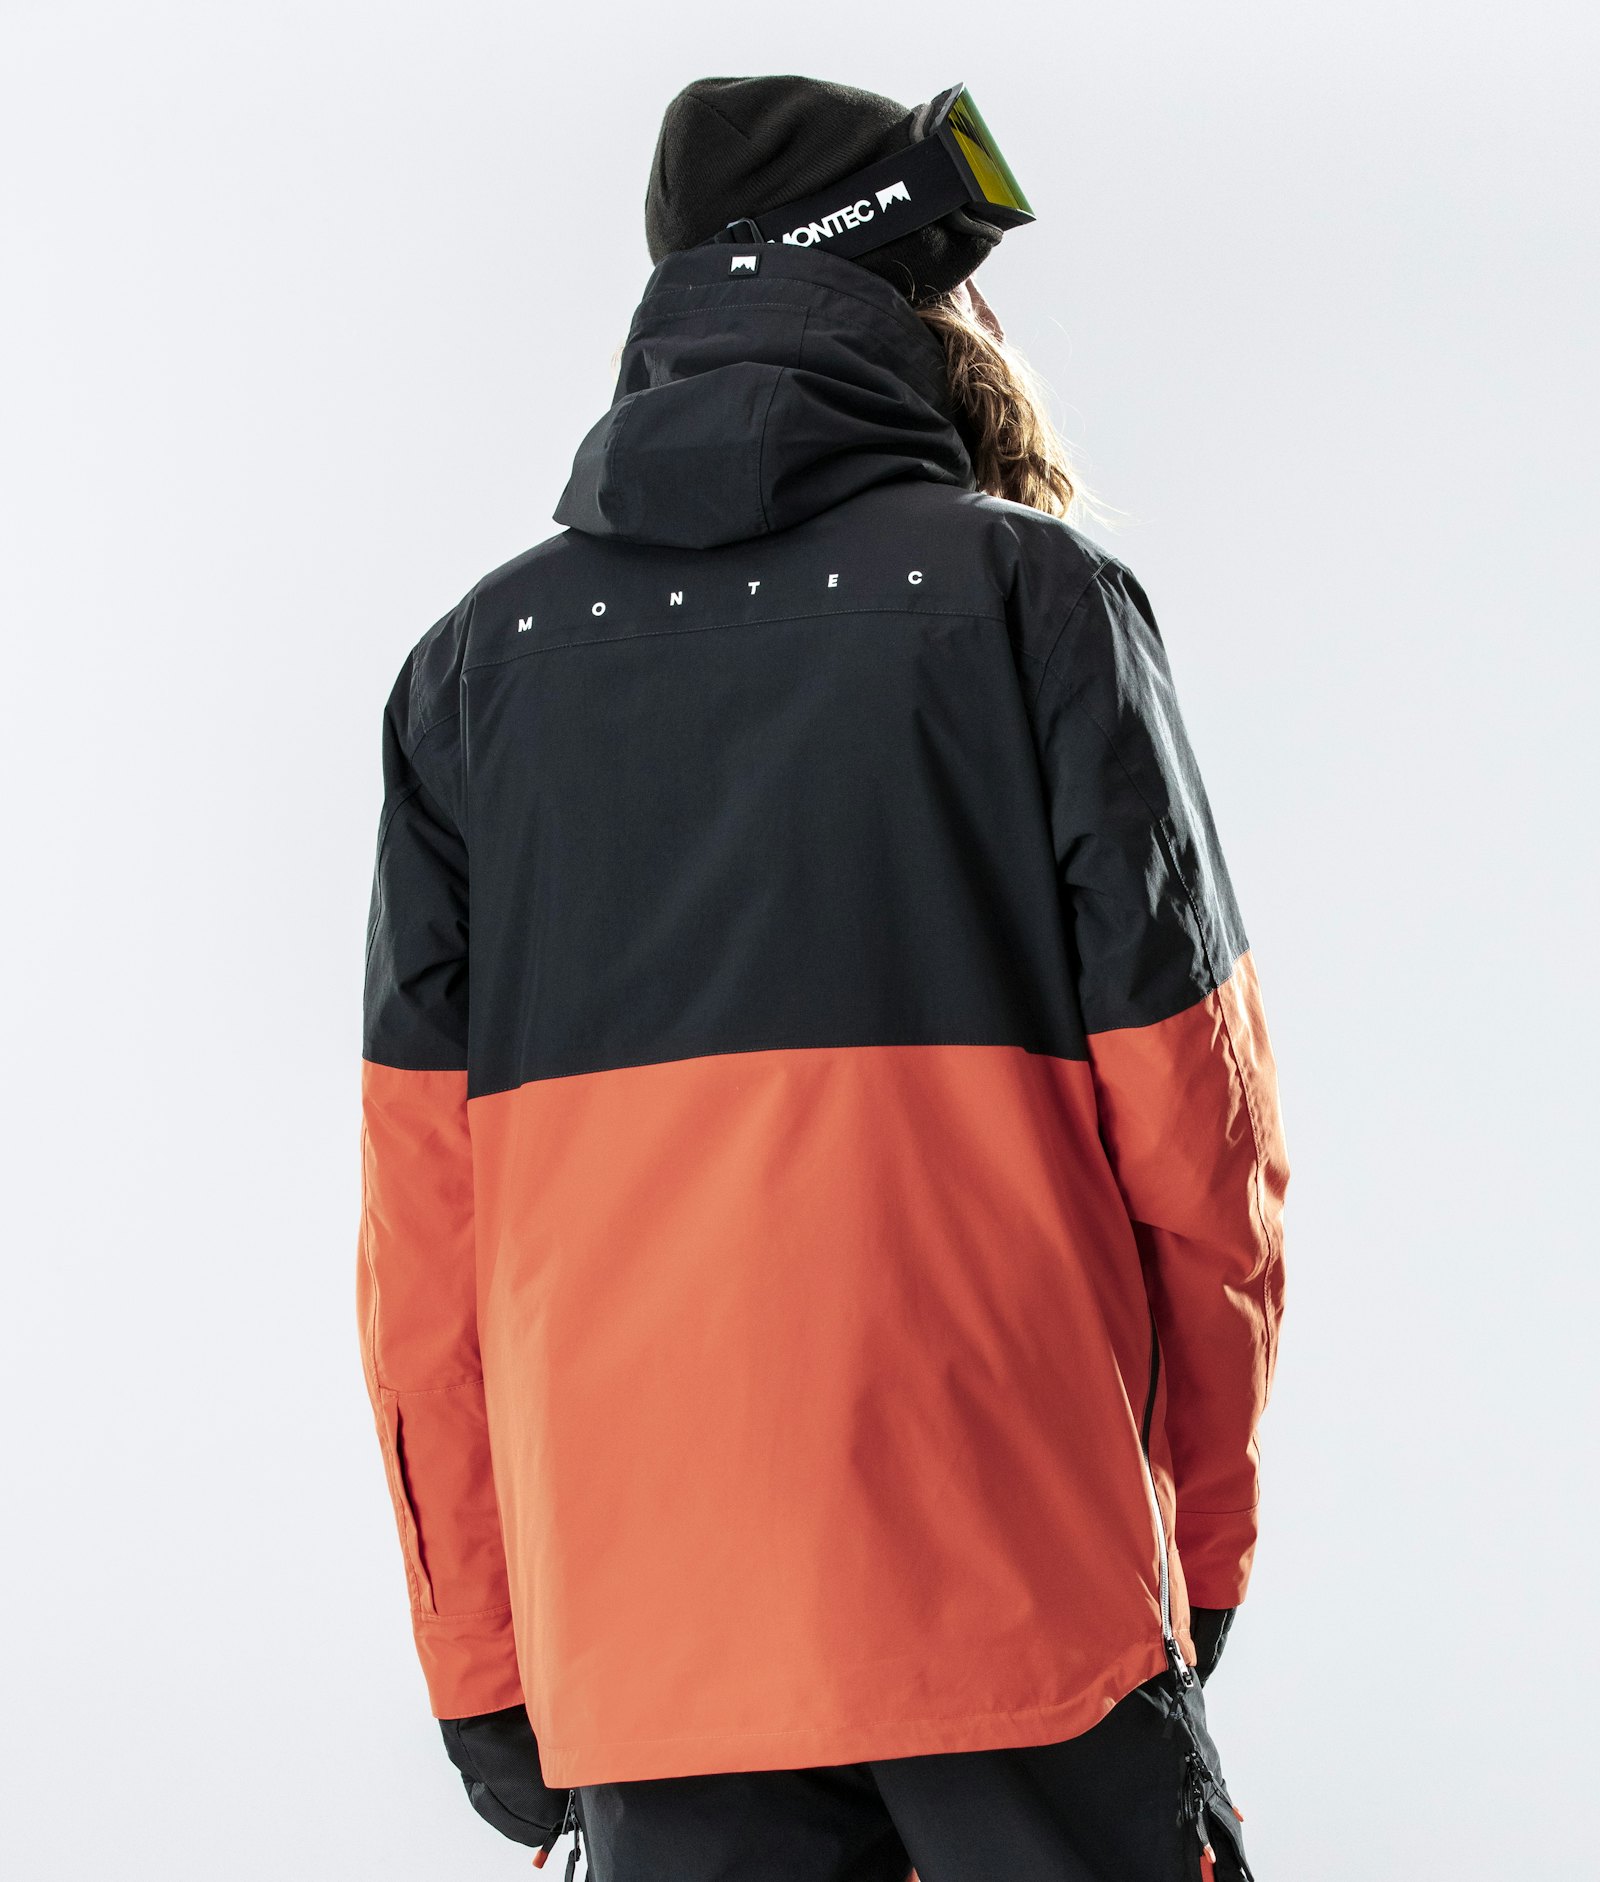 Dune 2020 Ski jas Heren Black/Orange